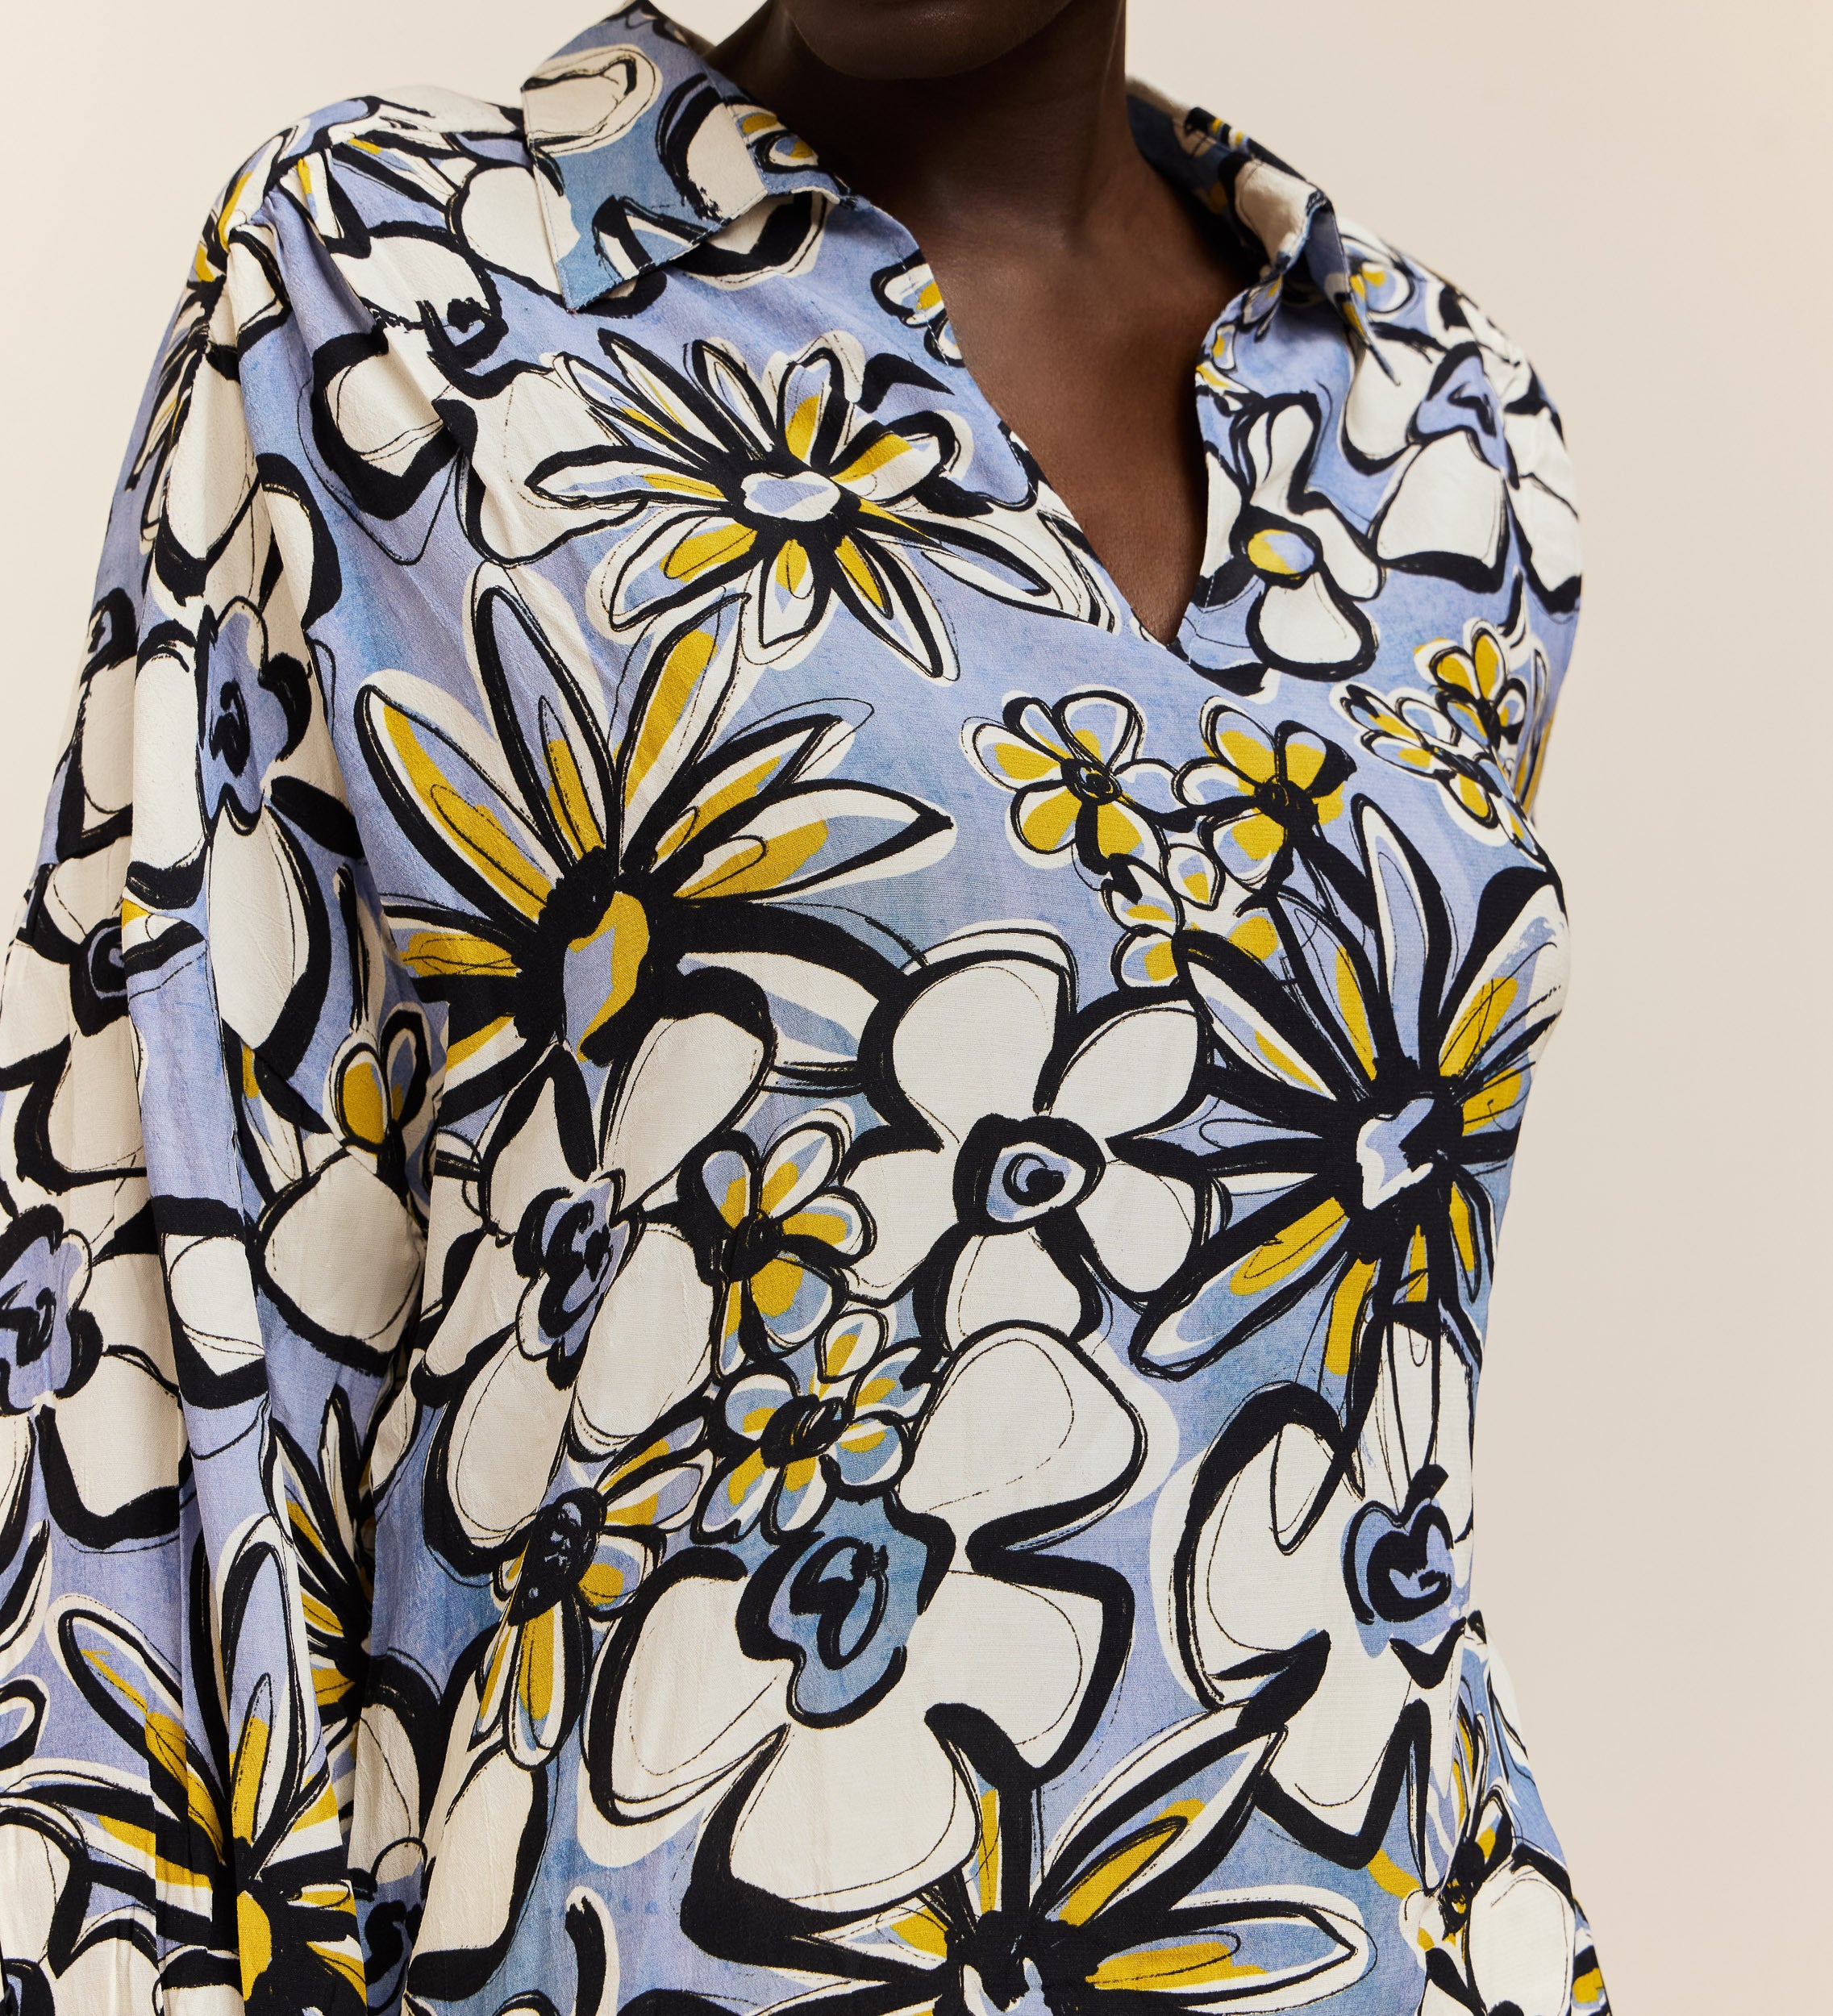 Flower print blouse